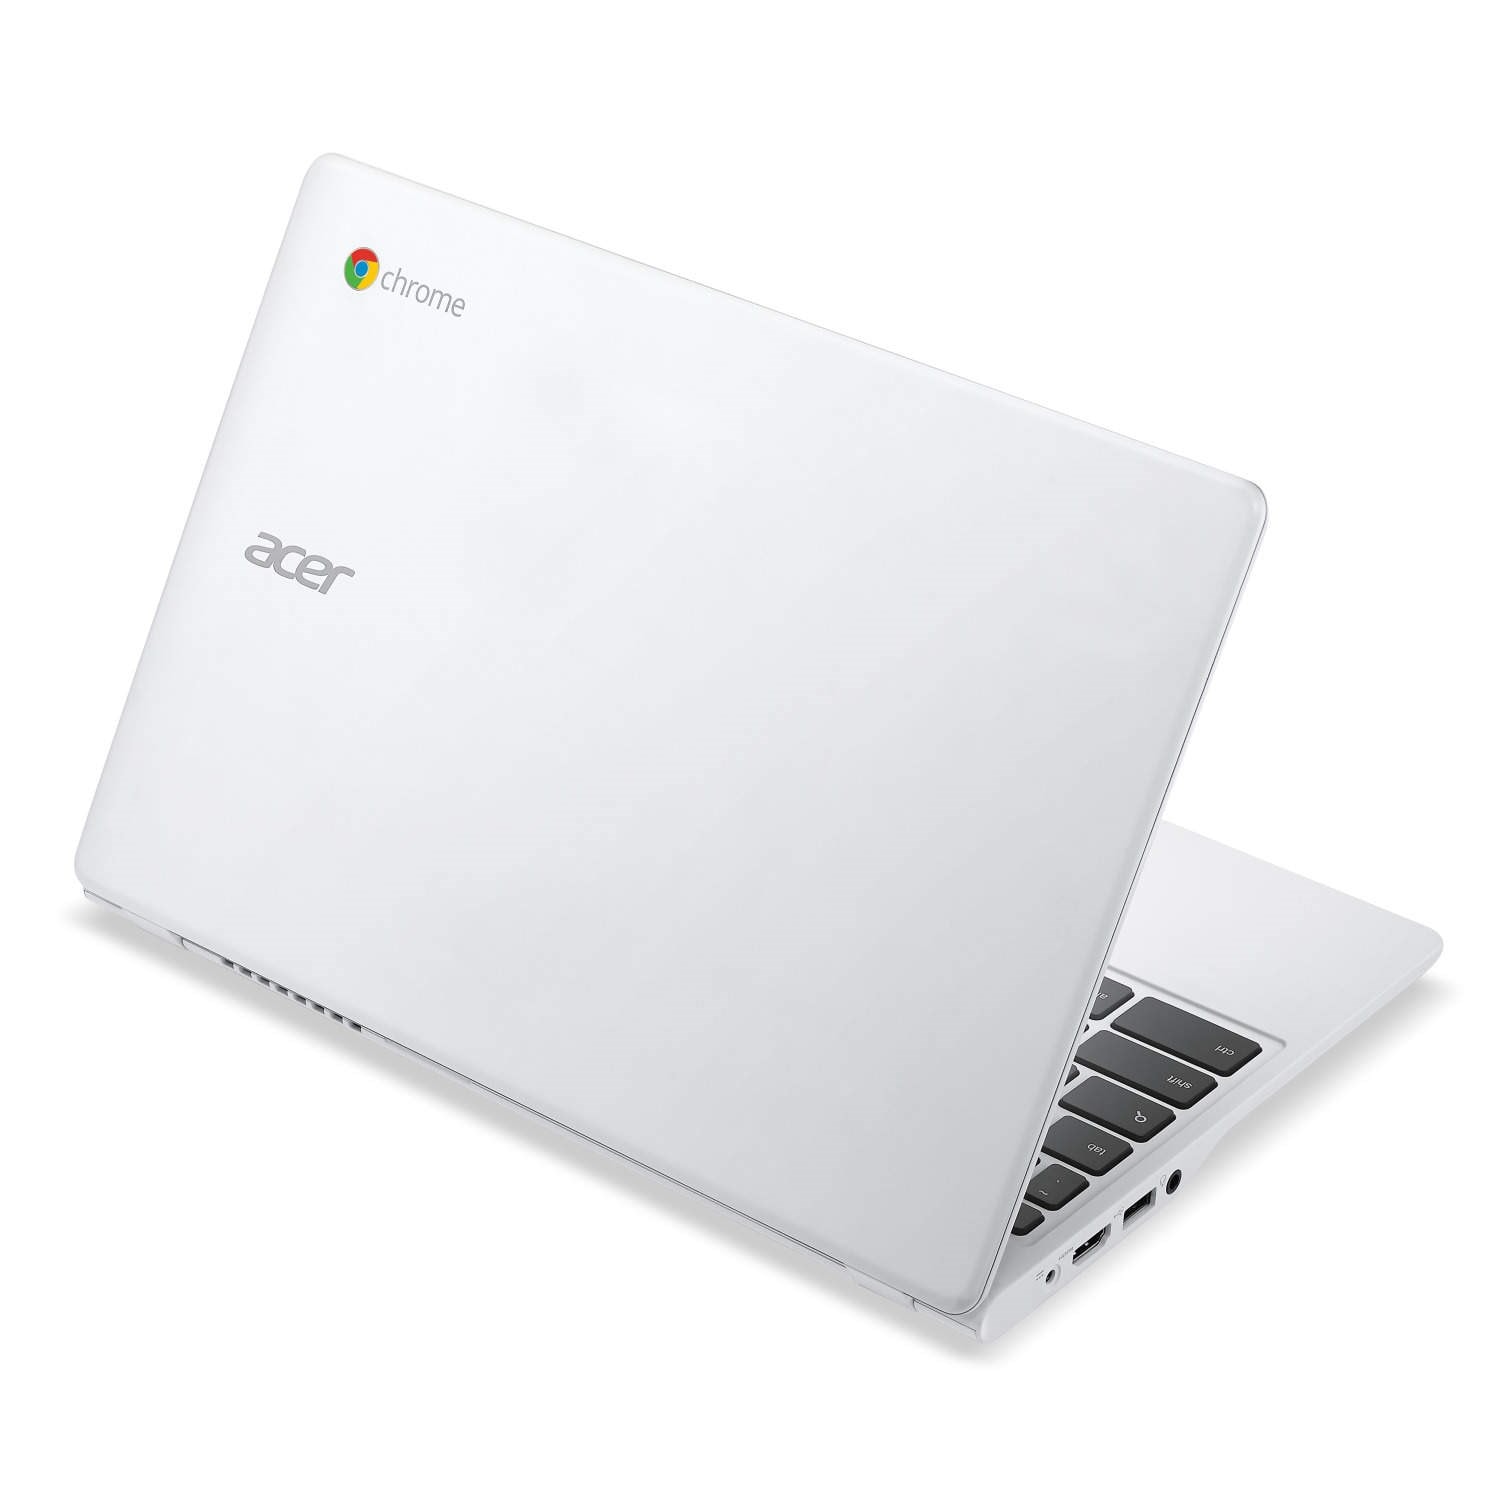 Acer Chromebook Laptop C720 Powerful 11.6